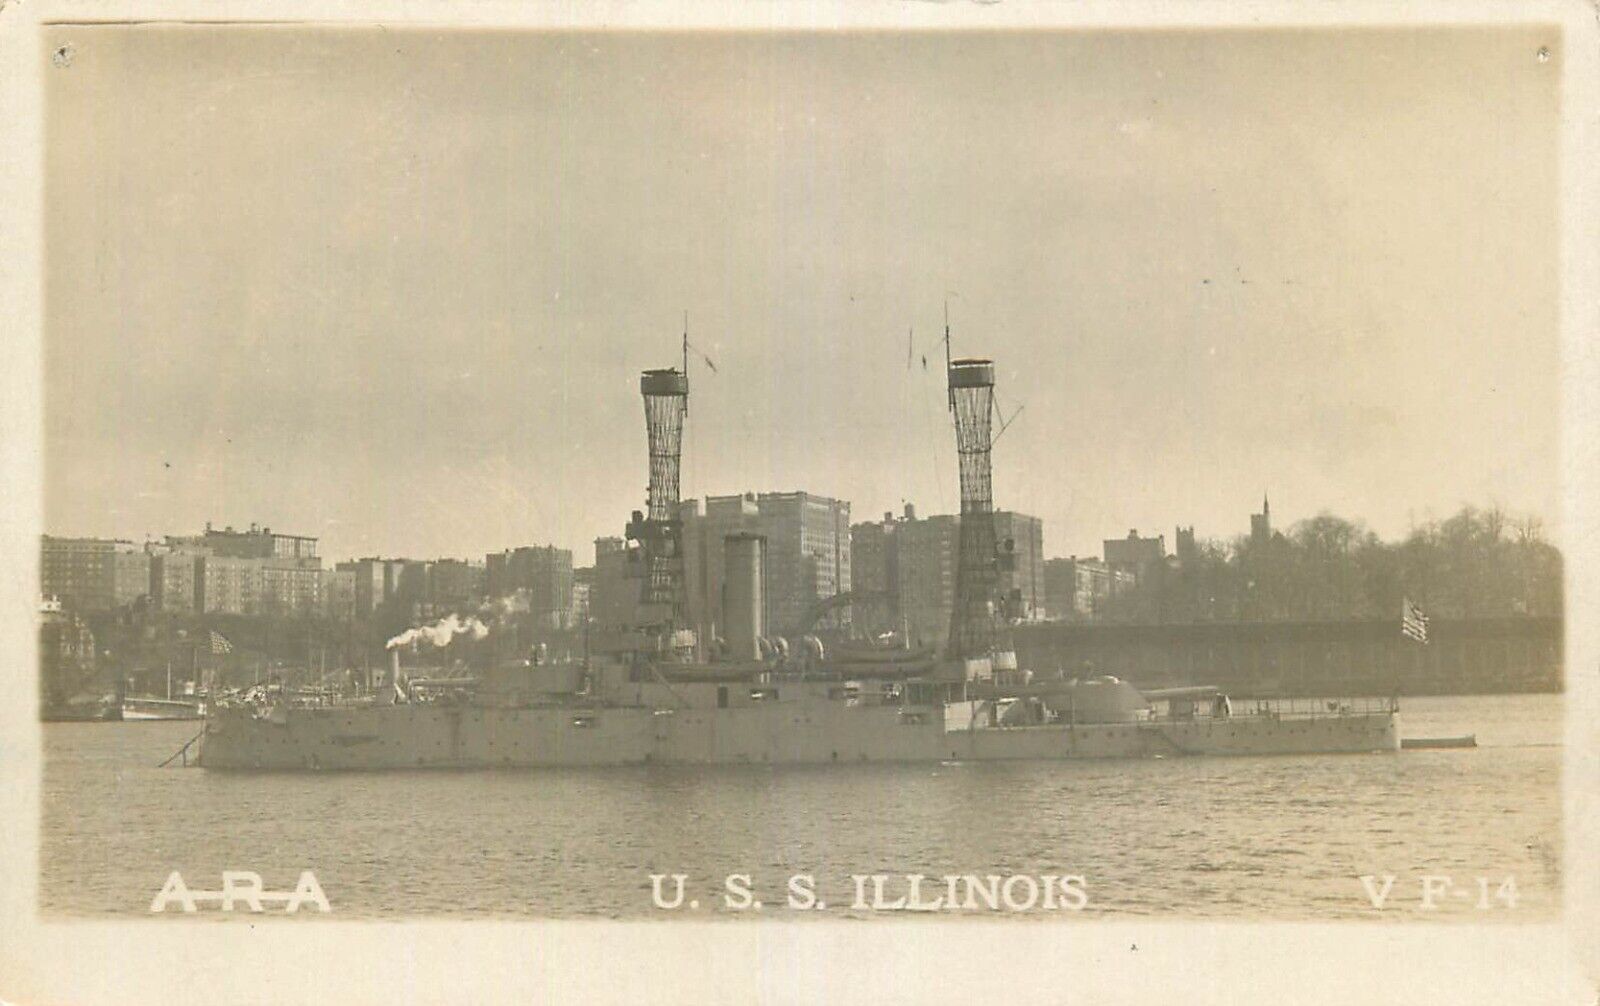 Real Photo Postcard - Battleship U.S.S. Illinois - V F-14